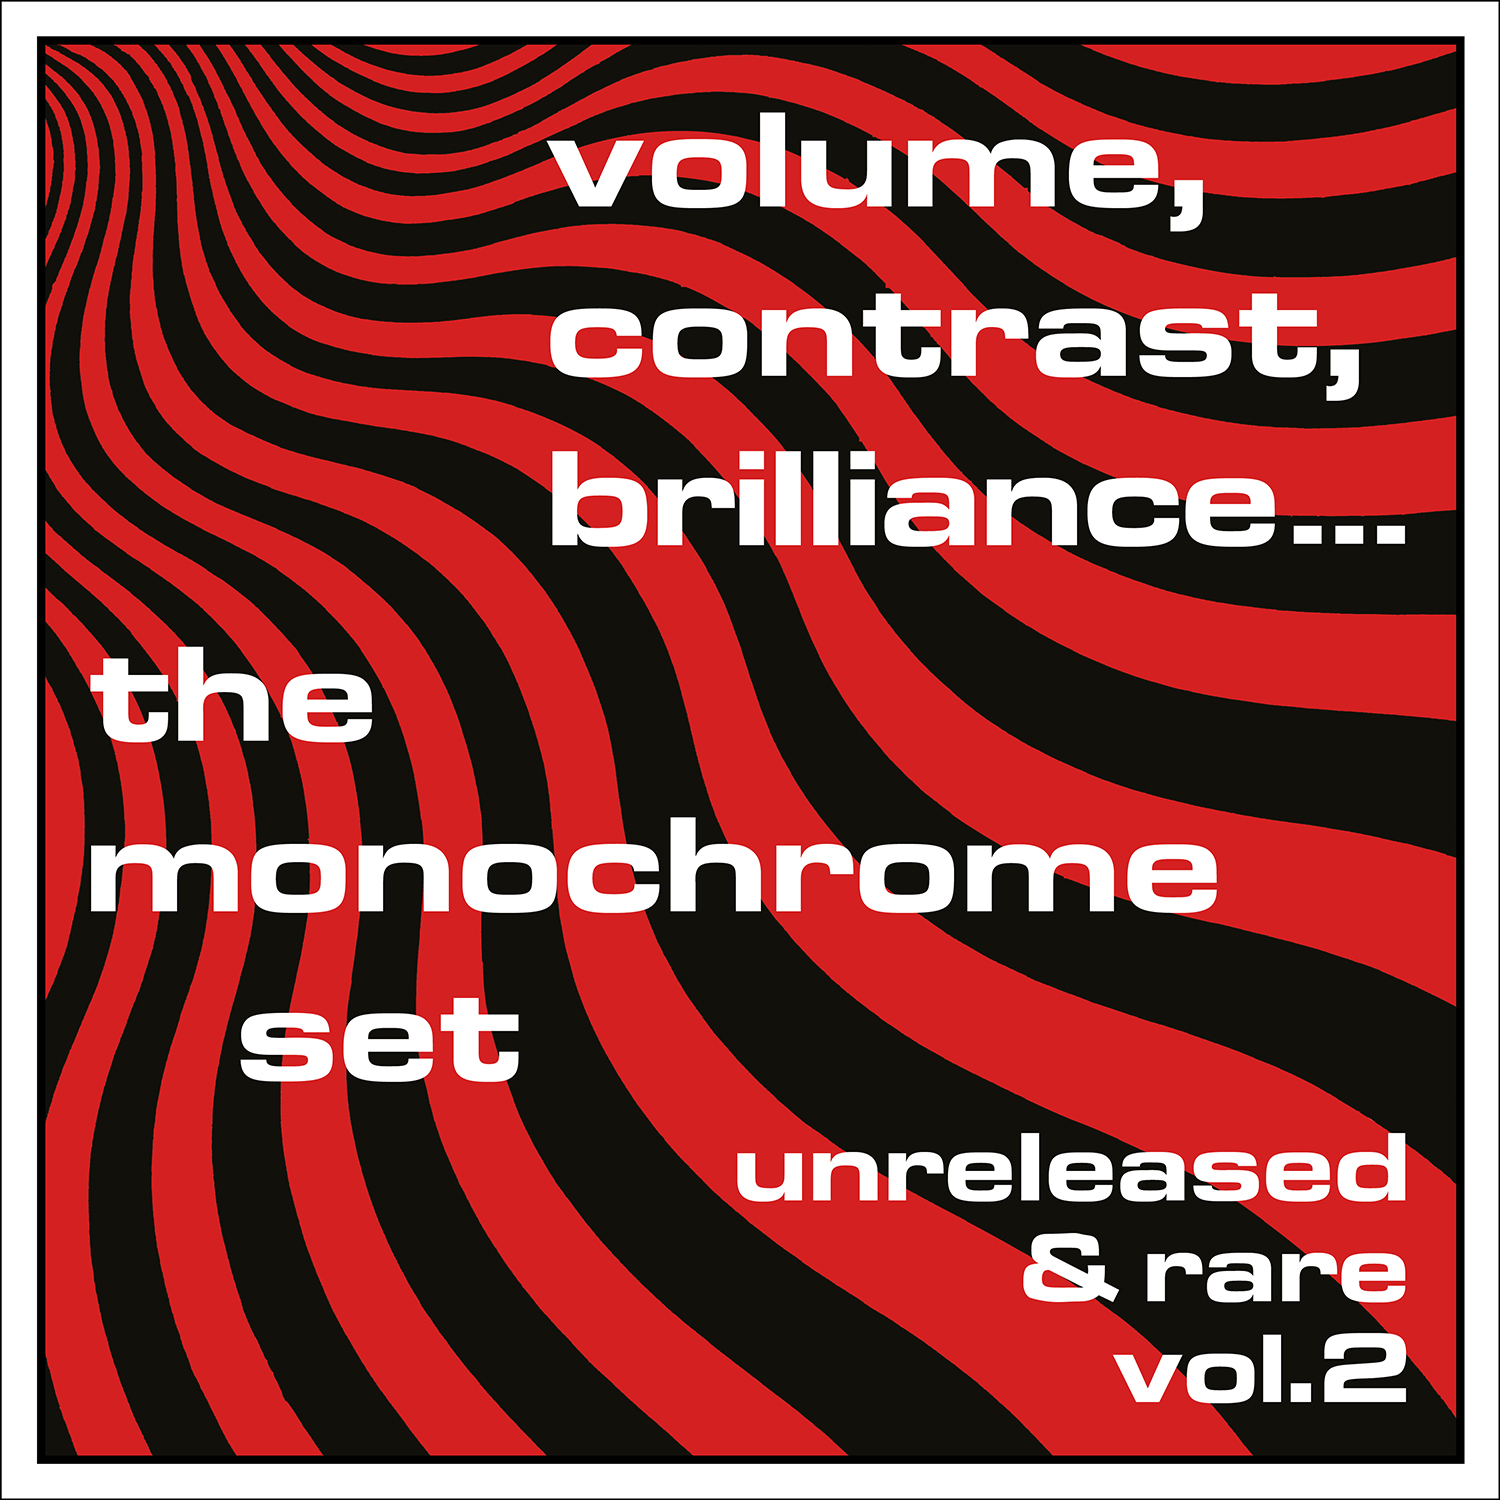 The Monochrome Set - Volume, Contrast, Brilliance... Vol.2